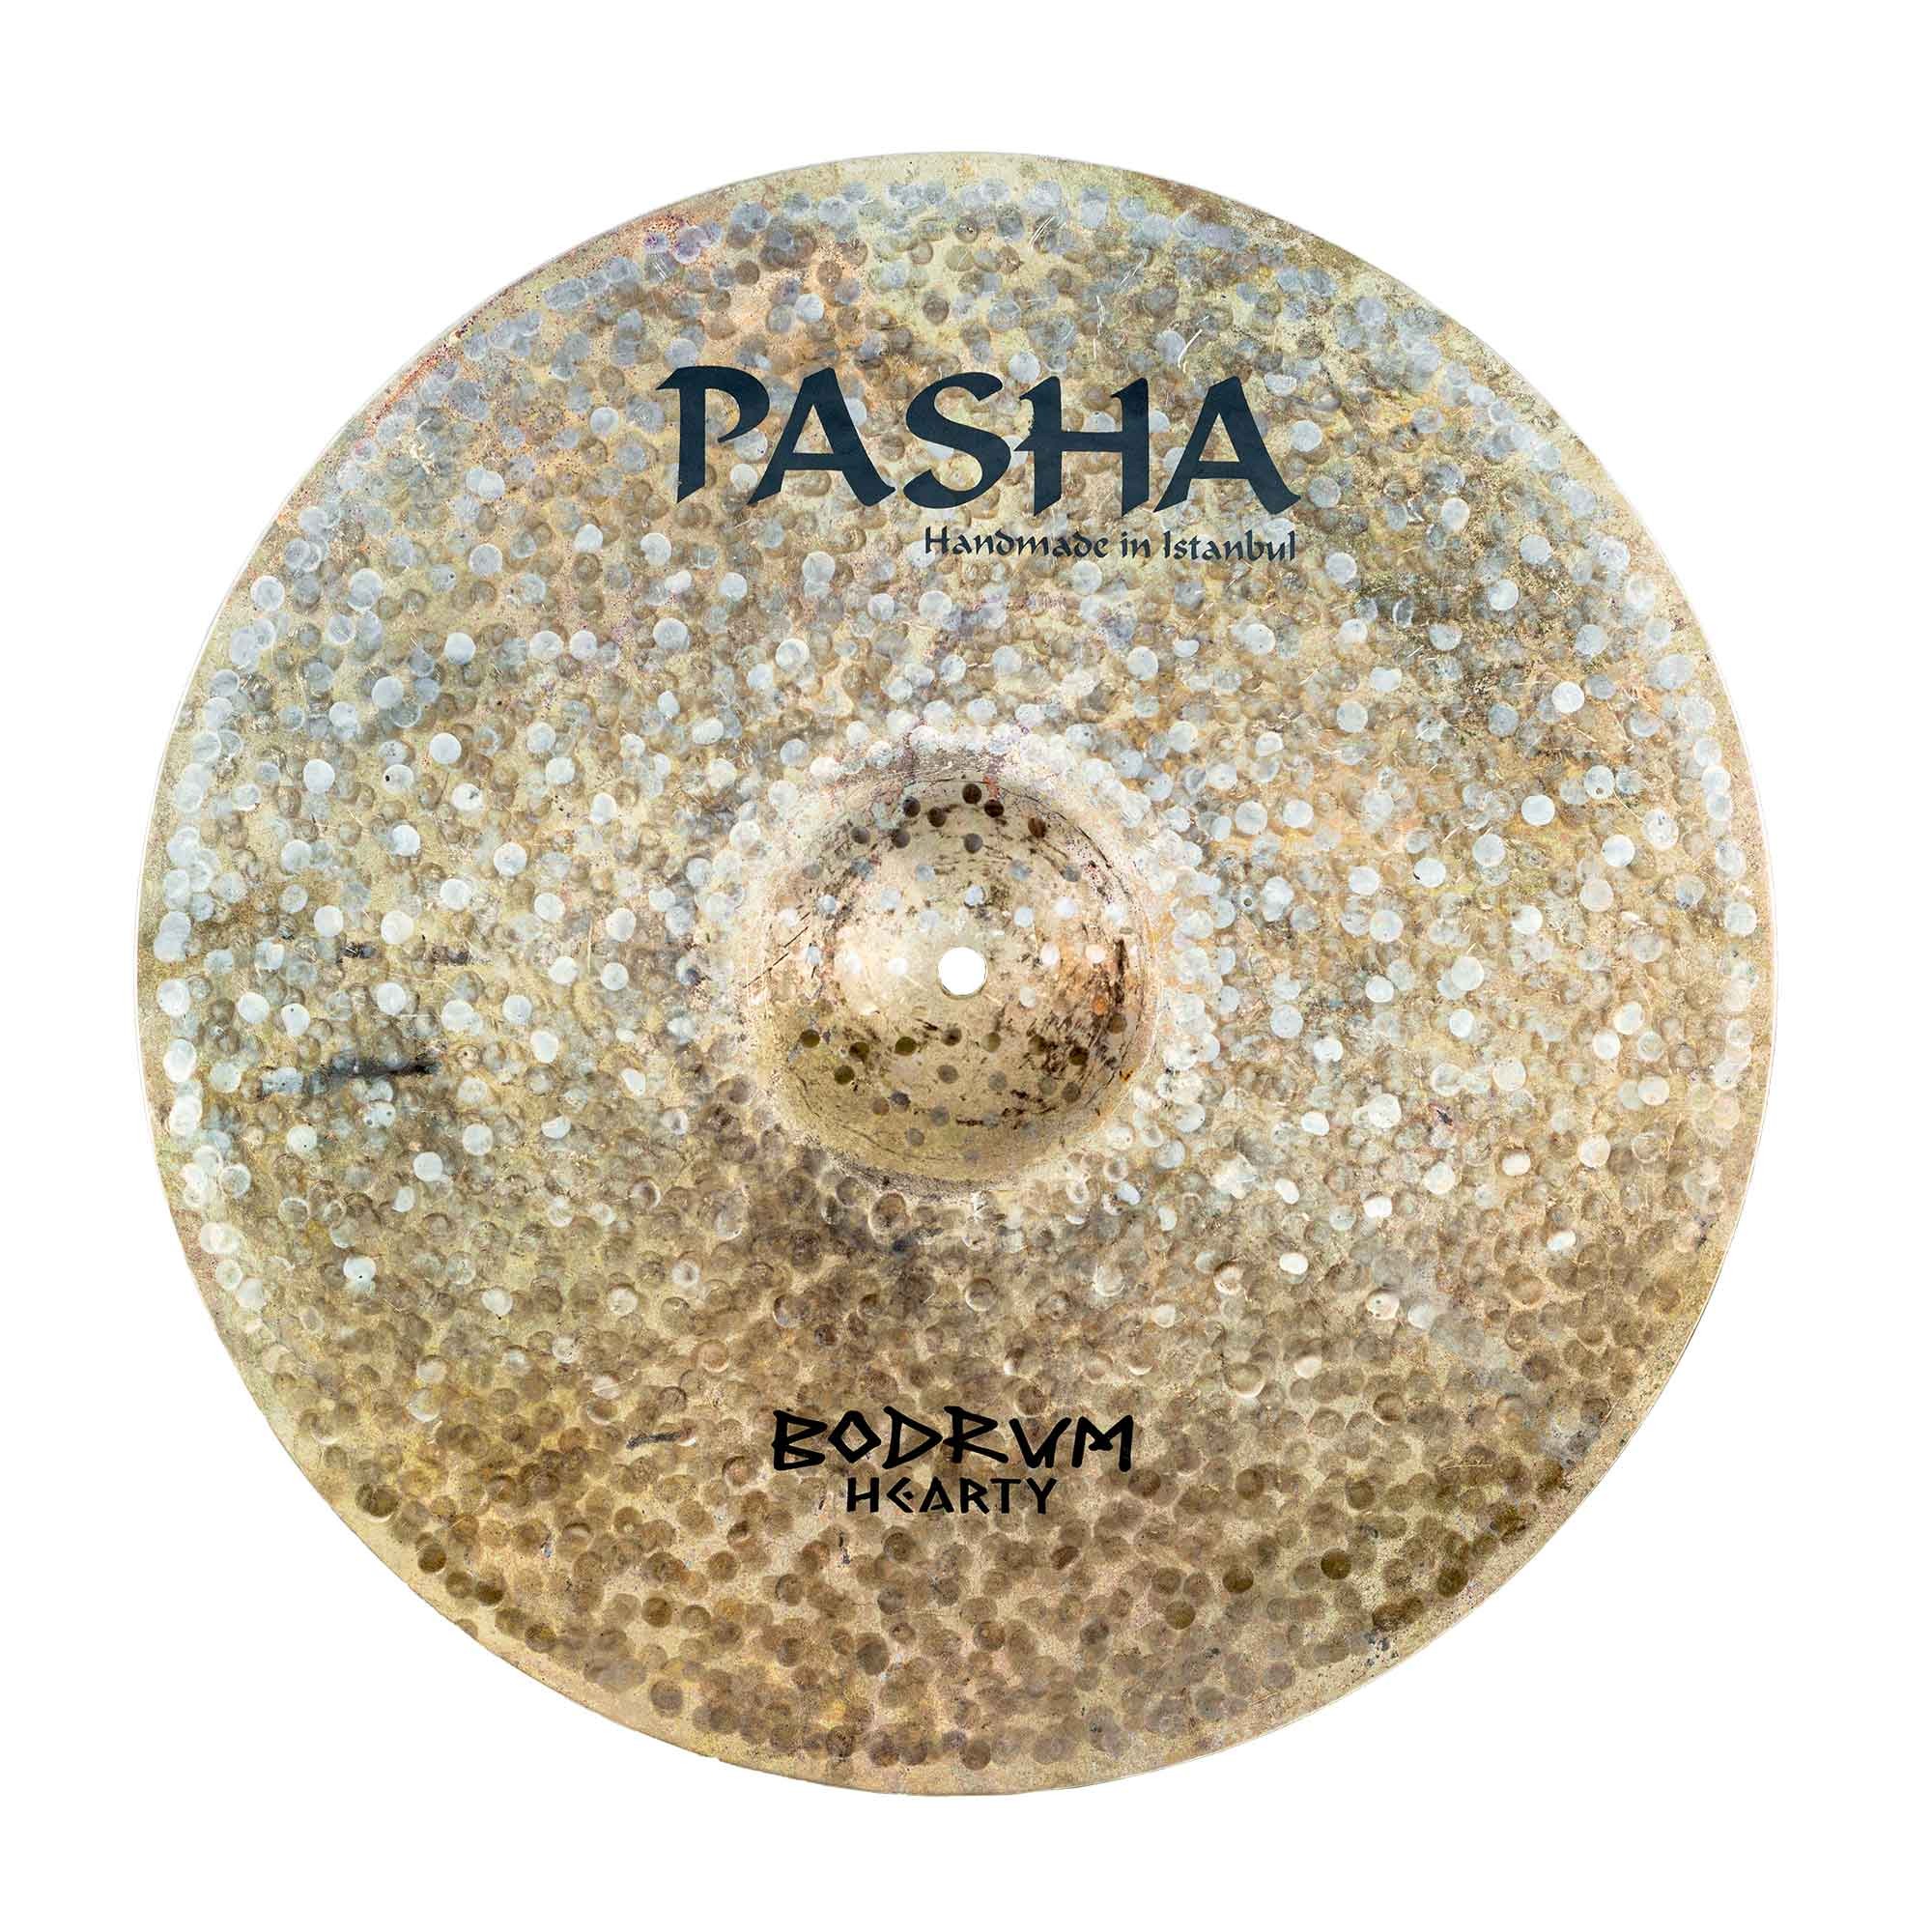 PASHA Pasha Bodrum Hearty Crash 18'' BDH-C18